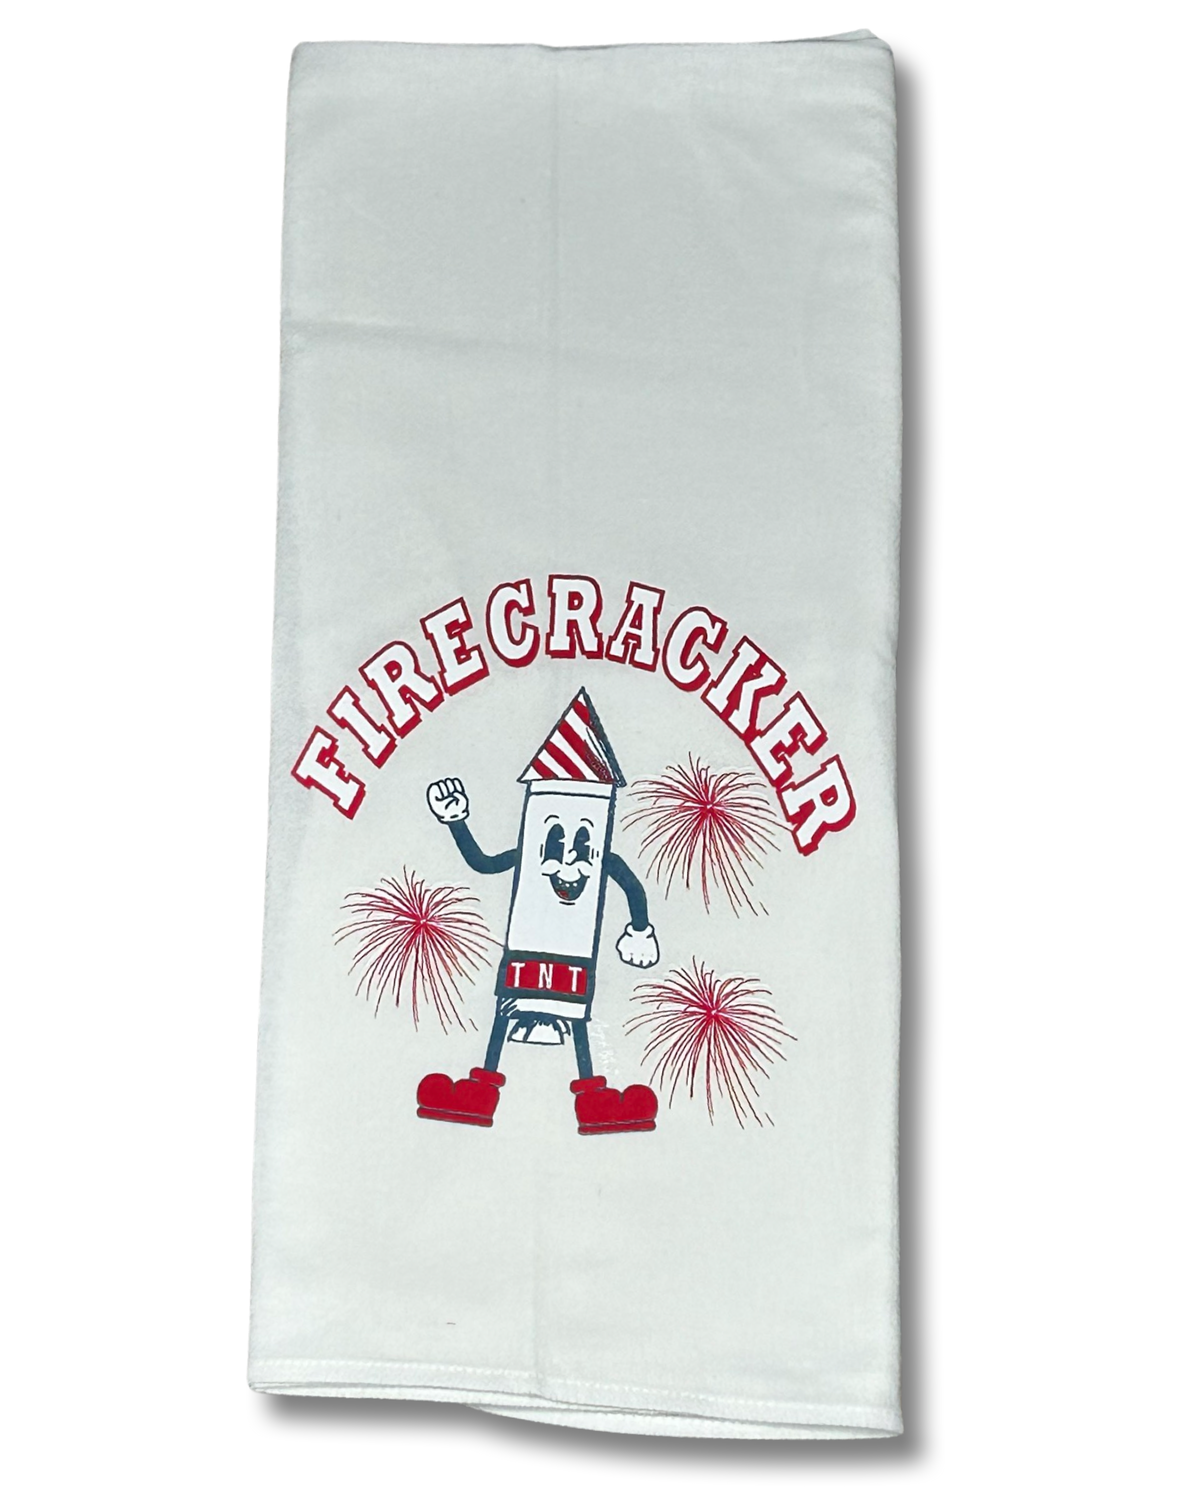 Firecracker graphic on a white kitchen tea towel 